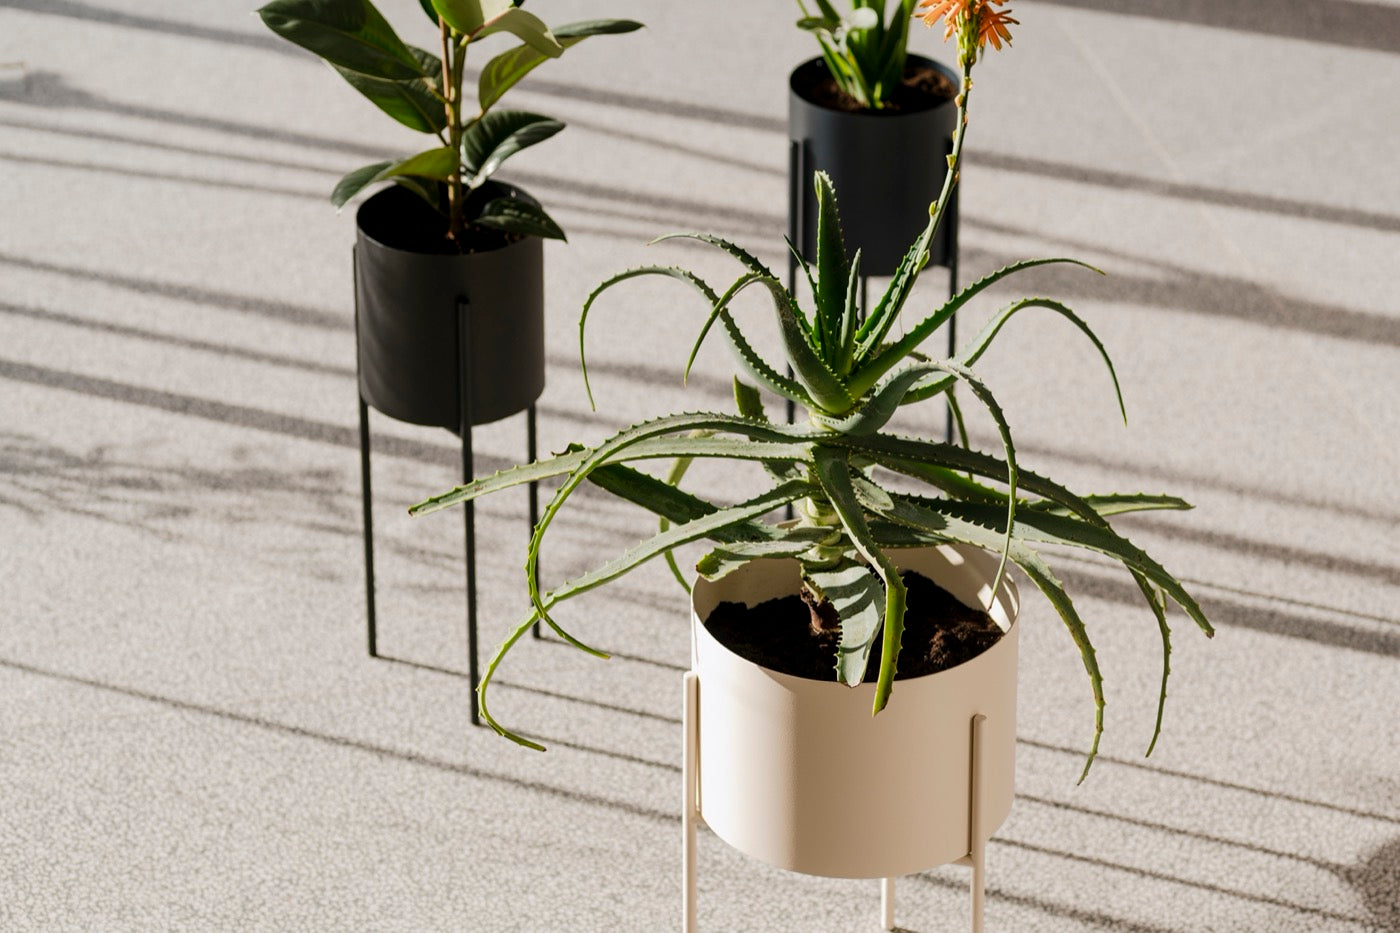 Maki Plant Pot Wide & Tall Bundle